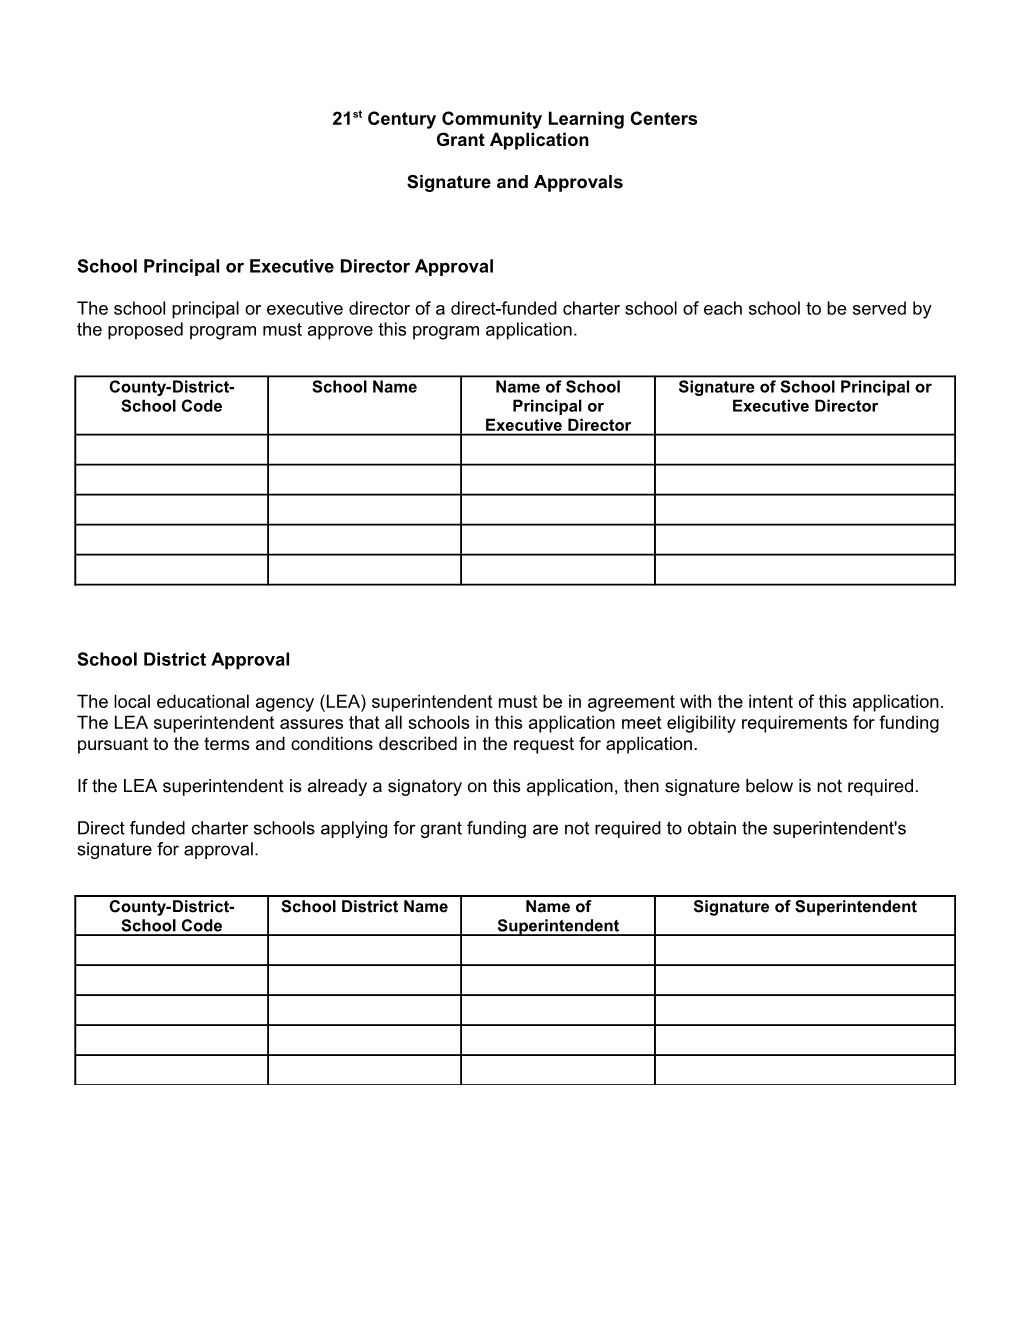 Form2-18: 21St CCLC Manual Application (CA Dept of Education)